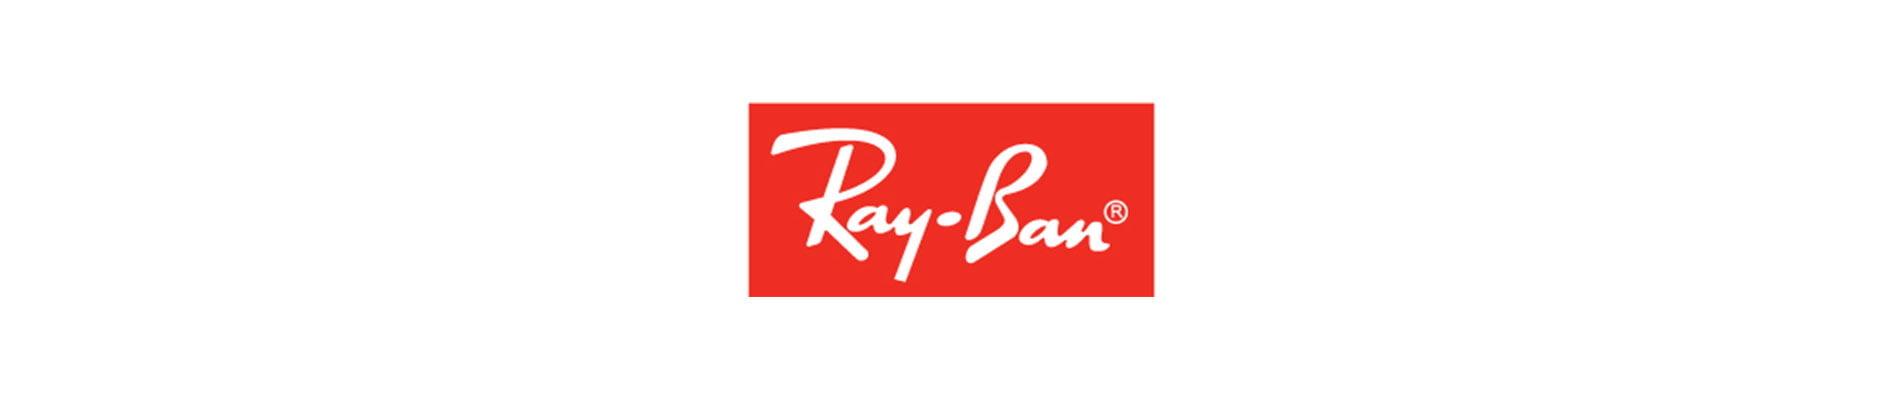 Ray Ban eyewear designer frames header